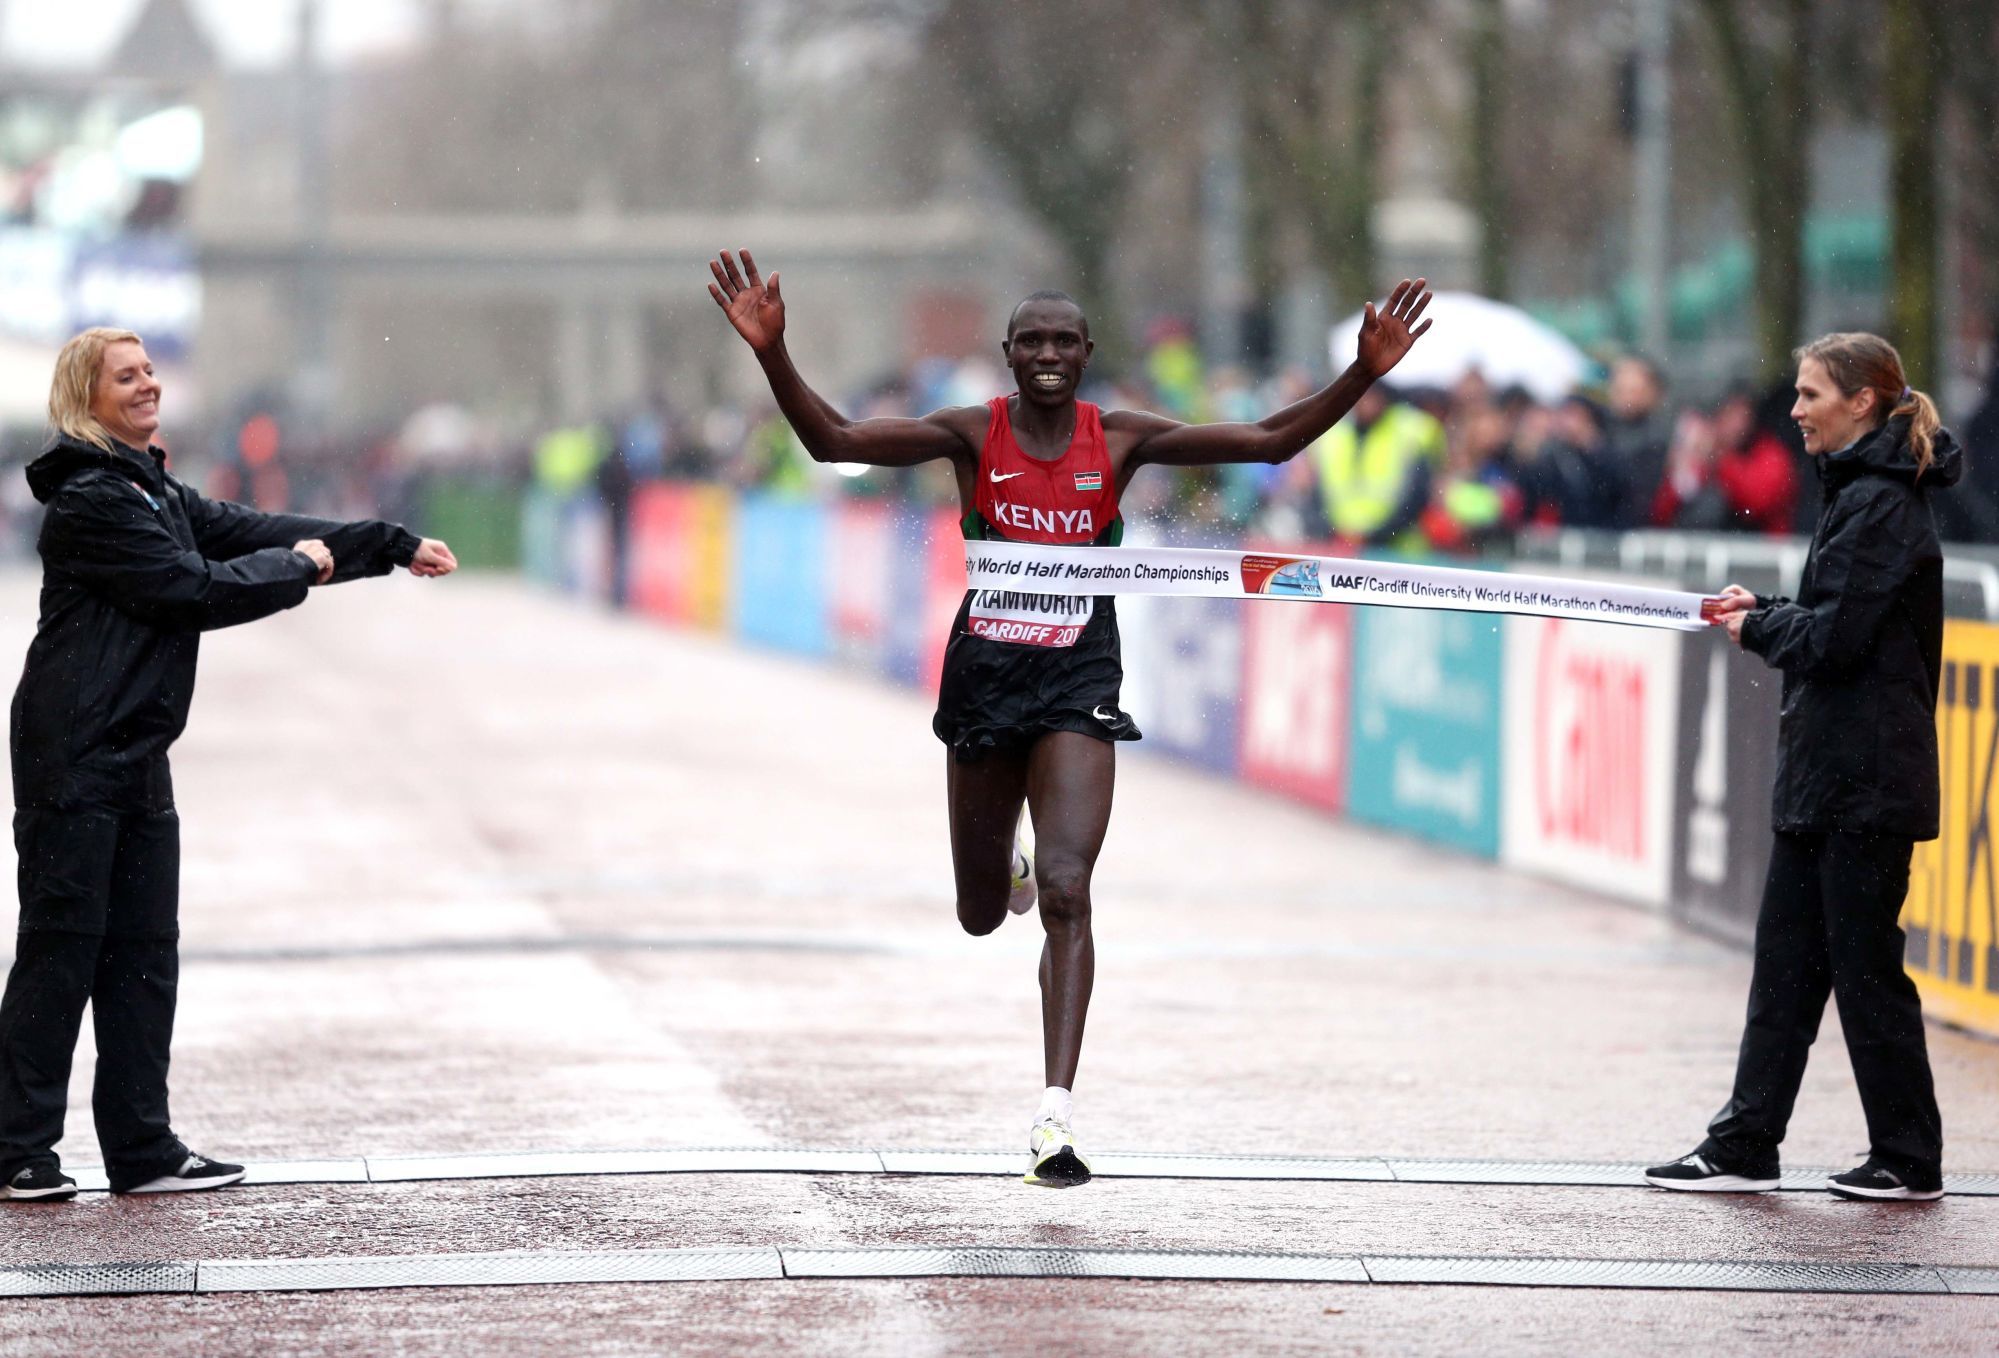 Kenya's Geoffrey Kipsang Kamworor wins the Men's Elite 2016 IAAF World Half Marathon Championships in Cardiff on March 26th 2016